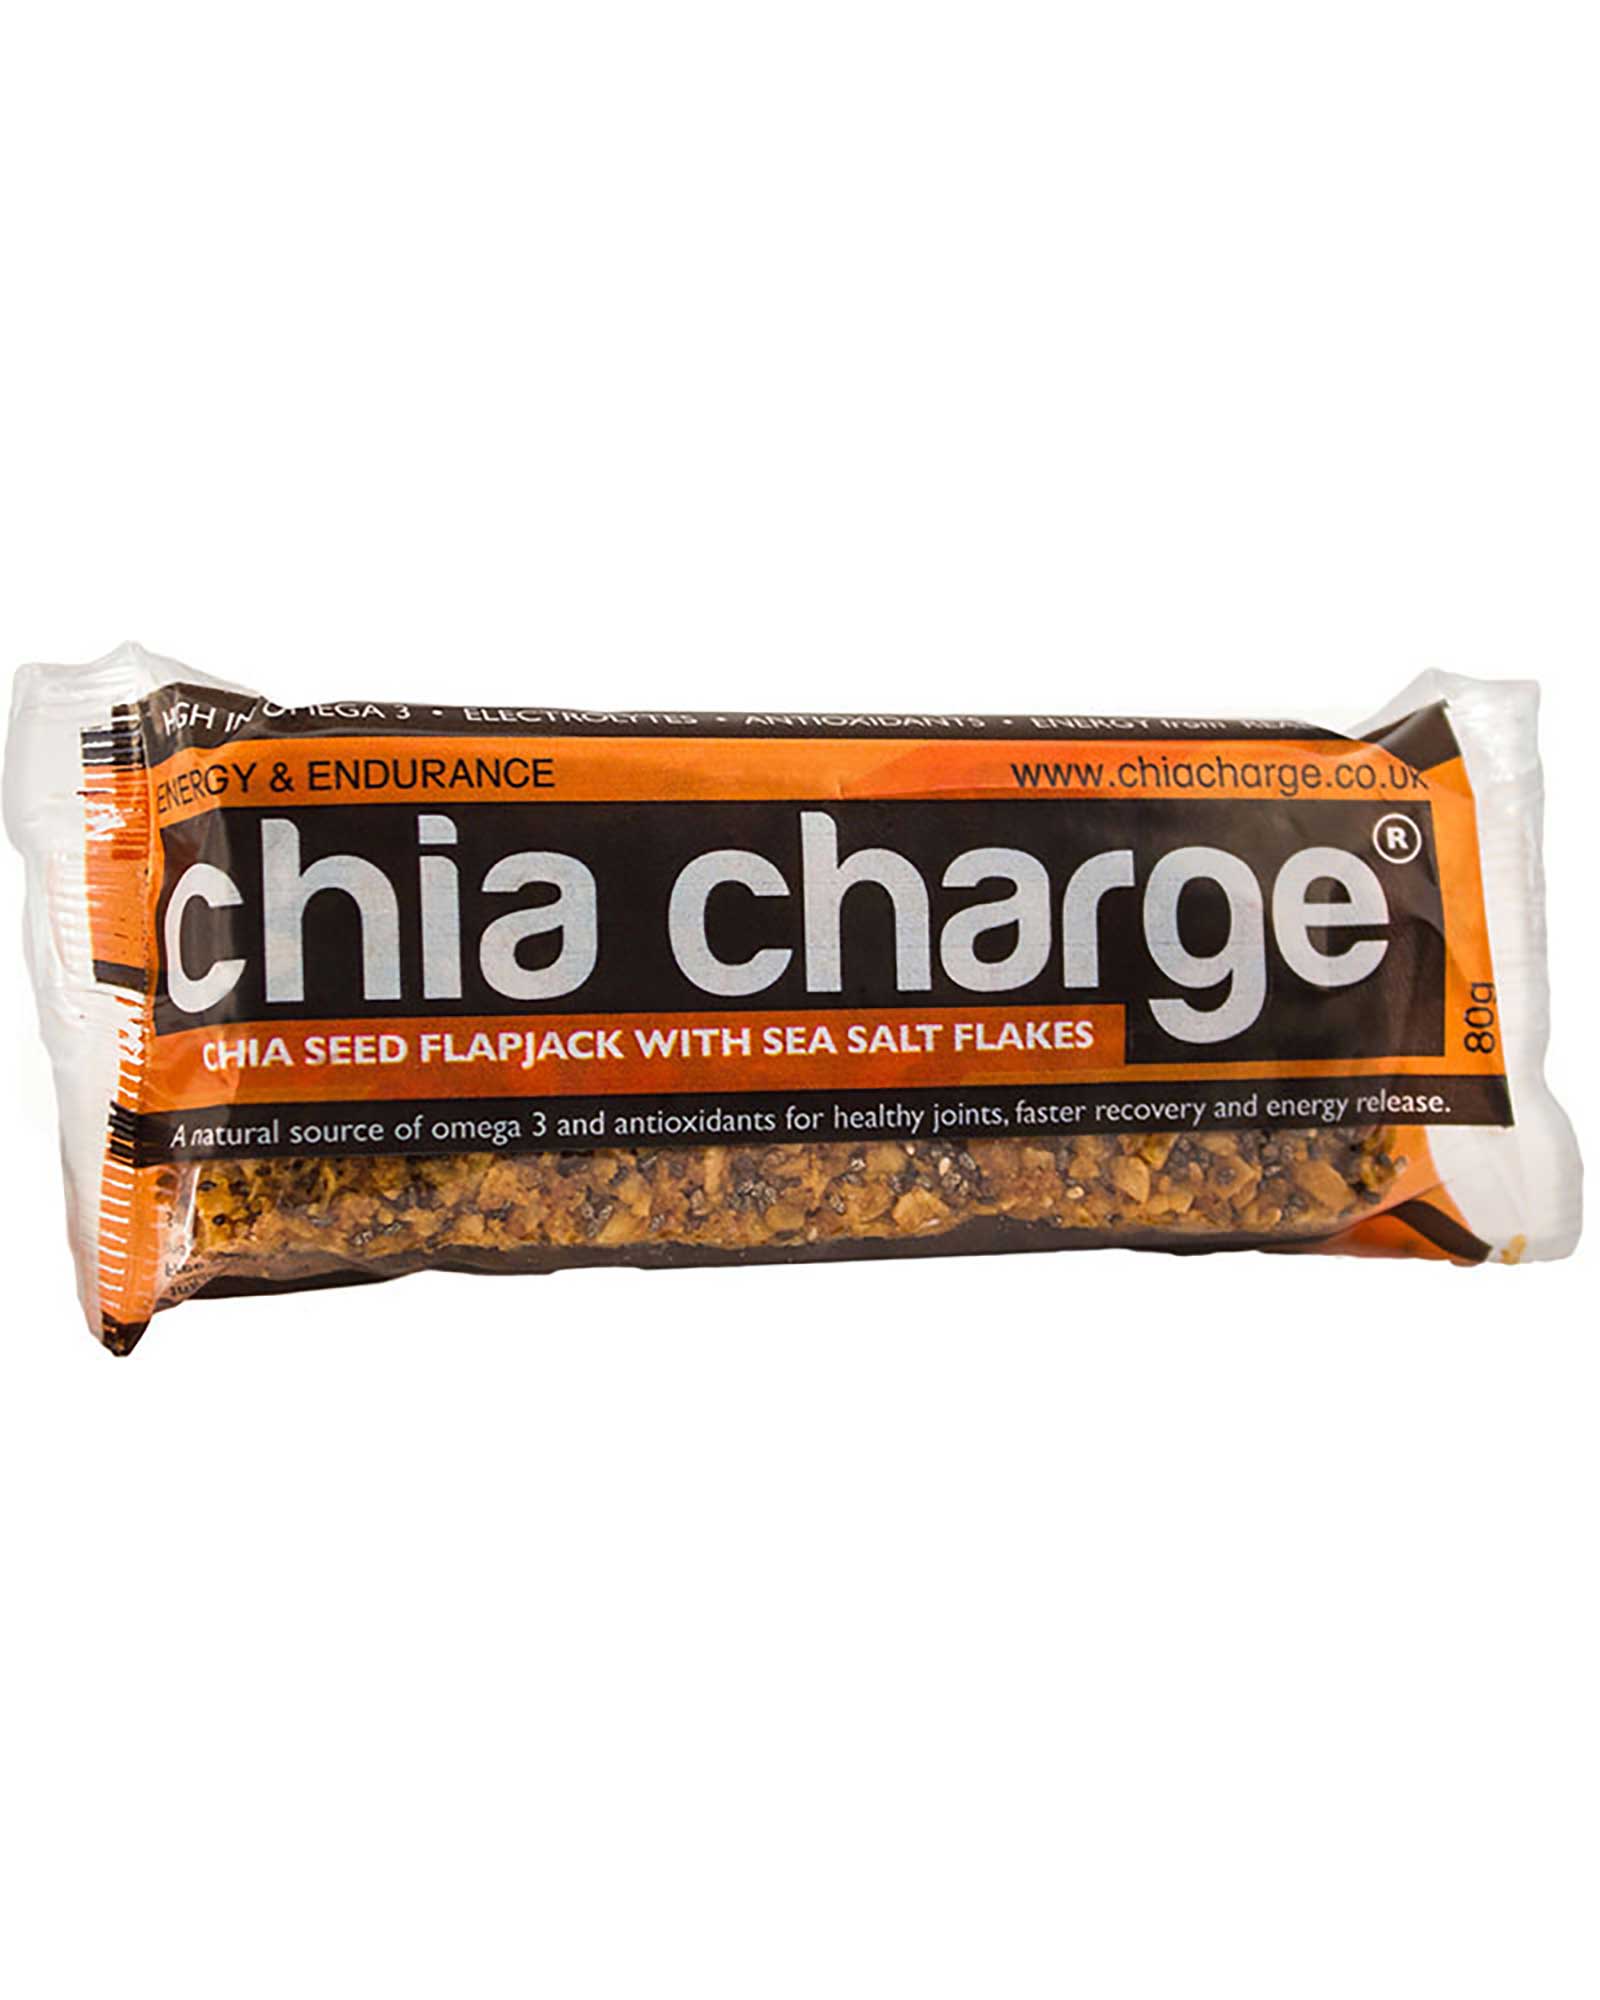 Chia Charge Flapjack Original - Original